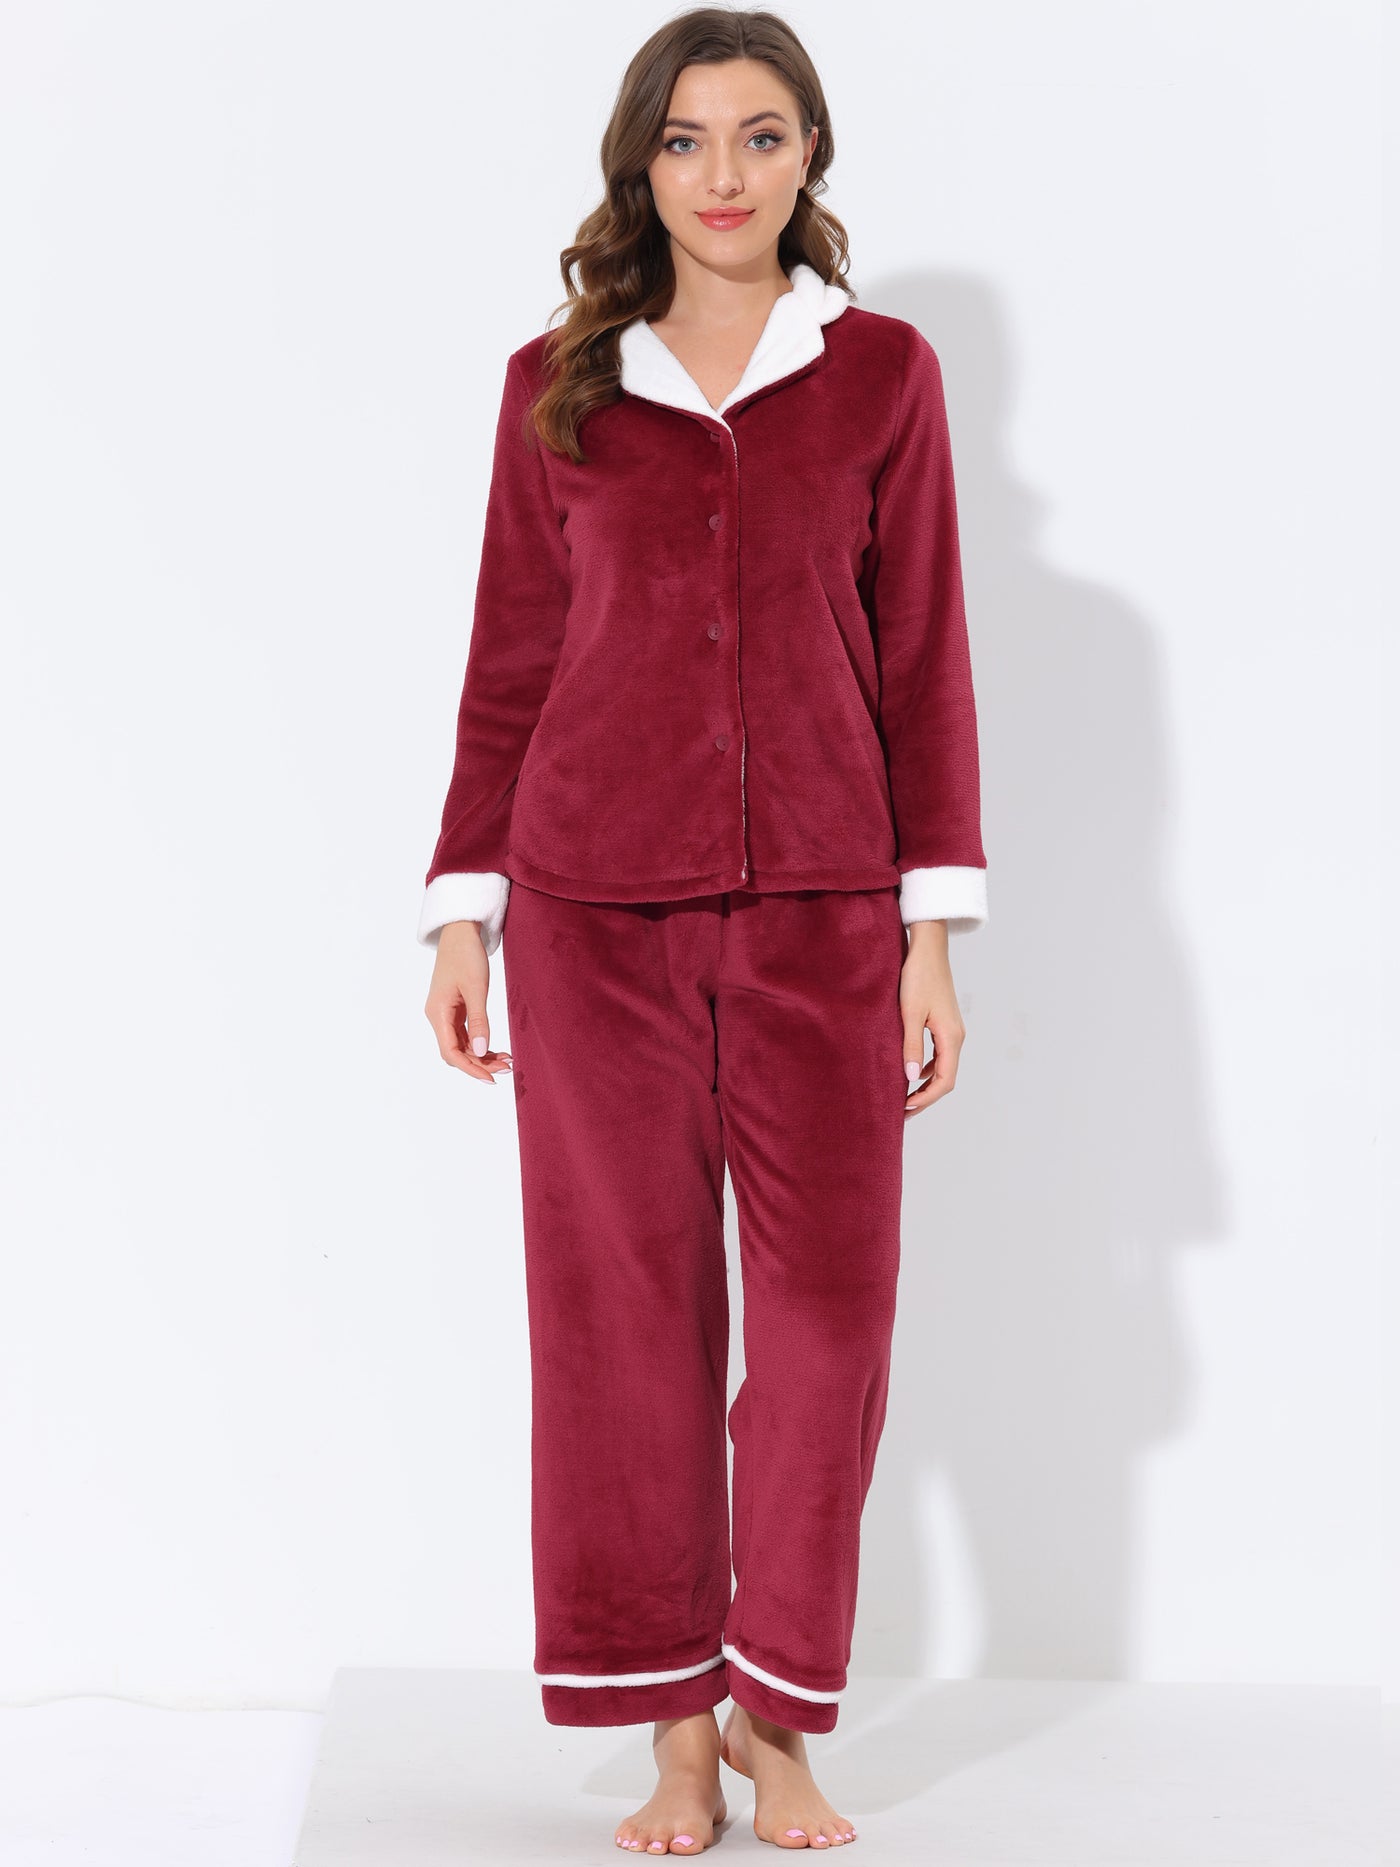 Bublédon Women's Sleepwear Button Down Warm Flannel Fleece Pajamas Set